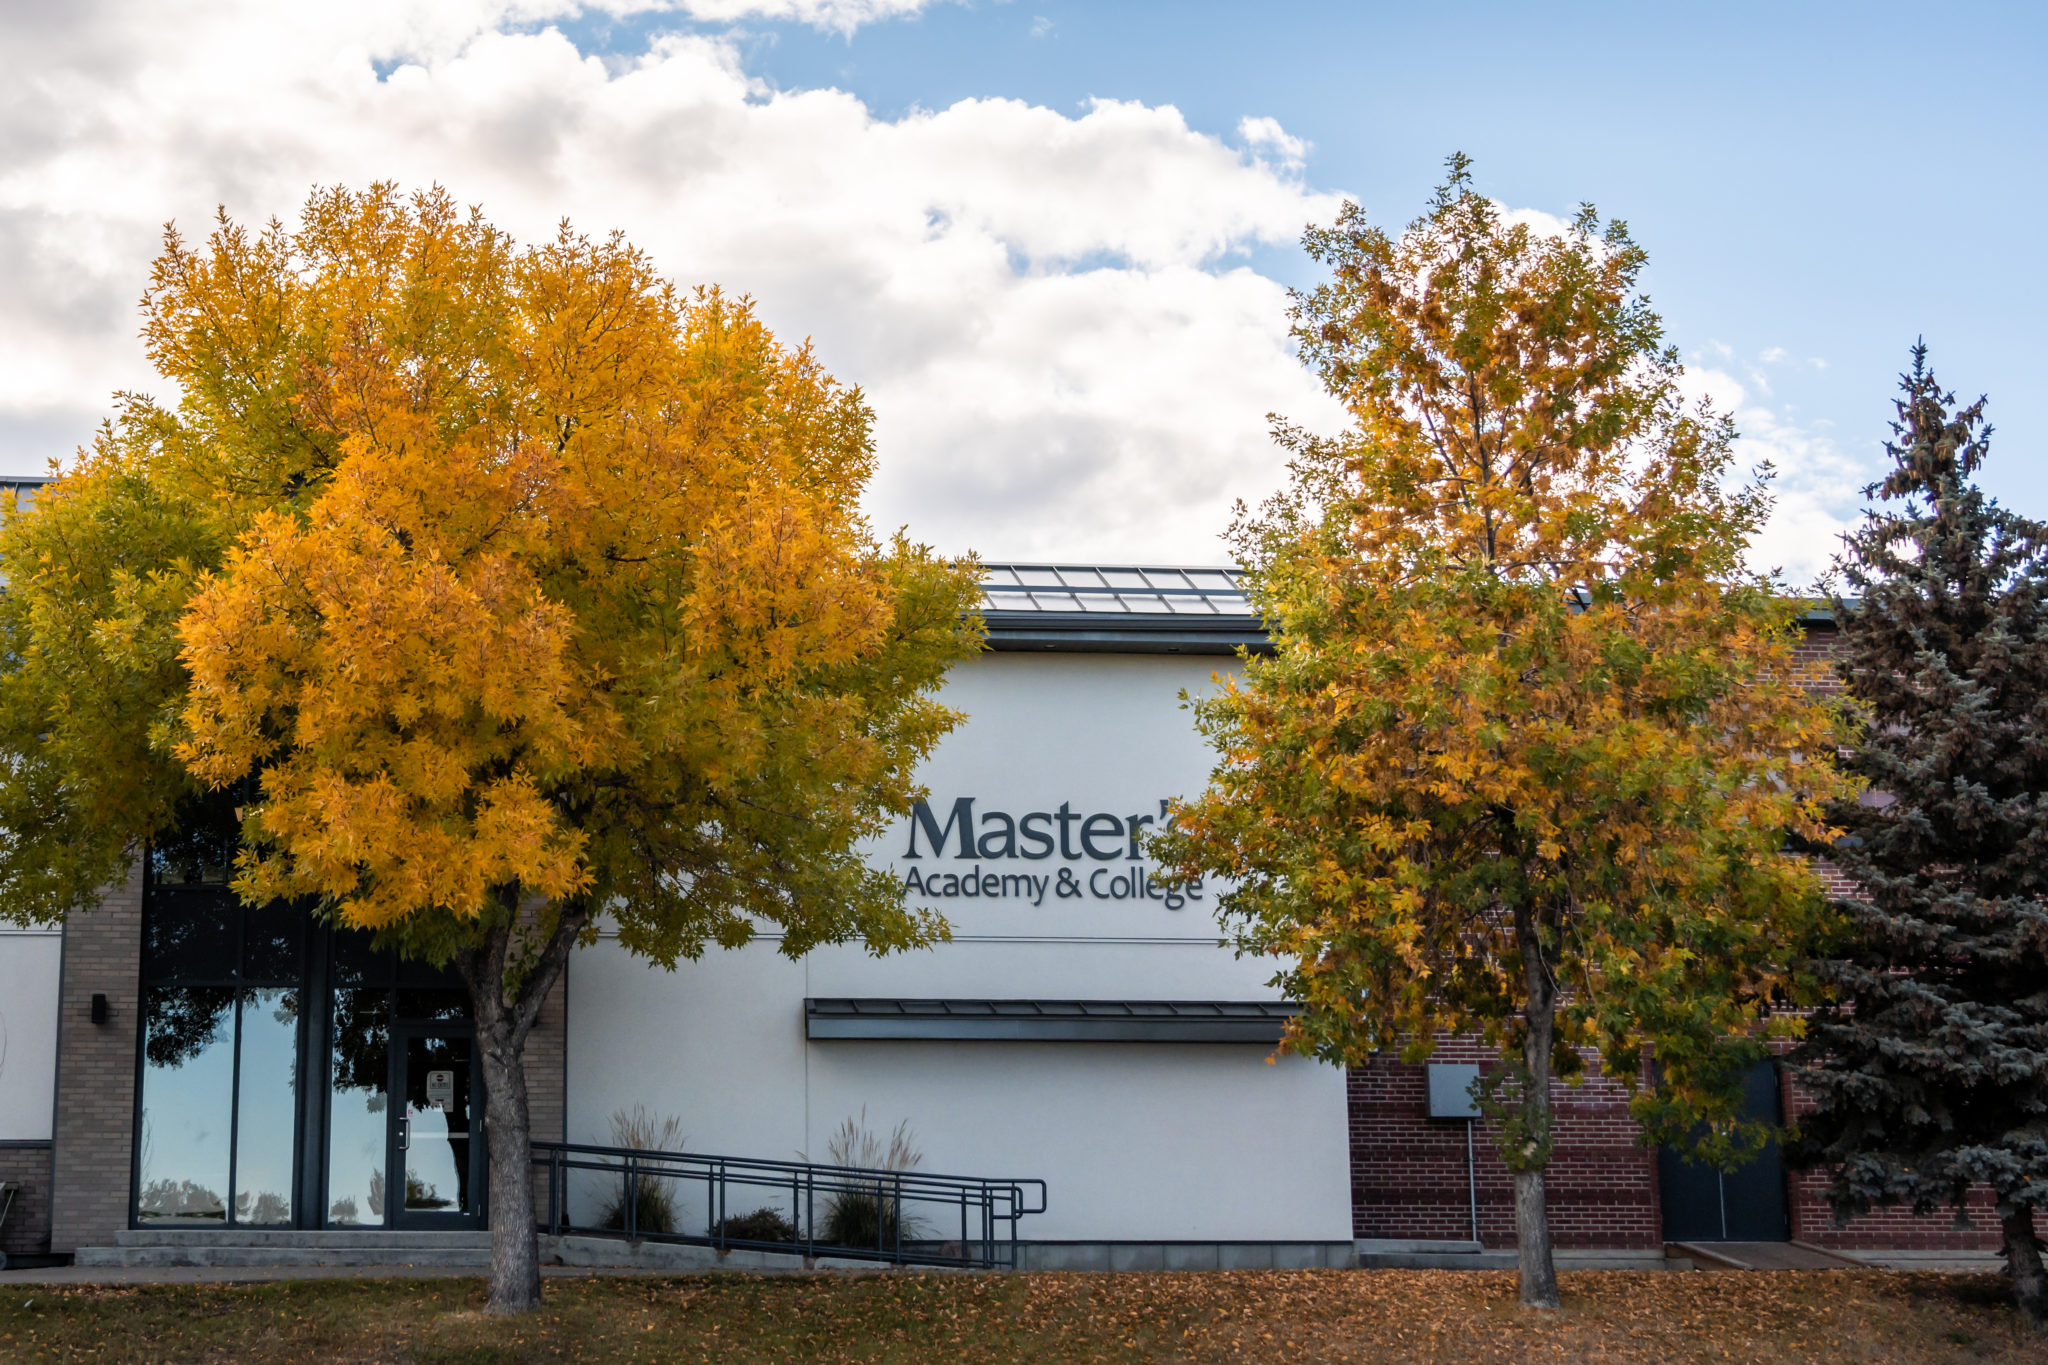 Master's Academy & College K12 in Calgary, Alberta